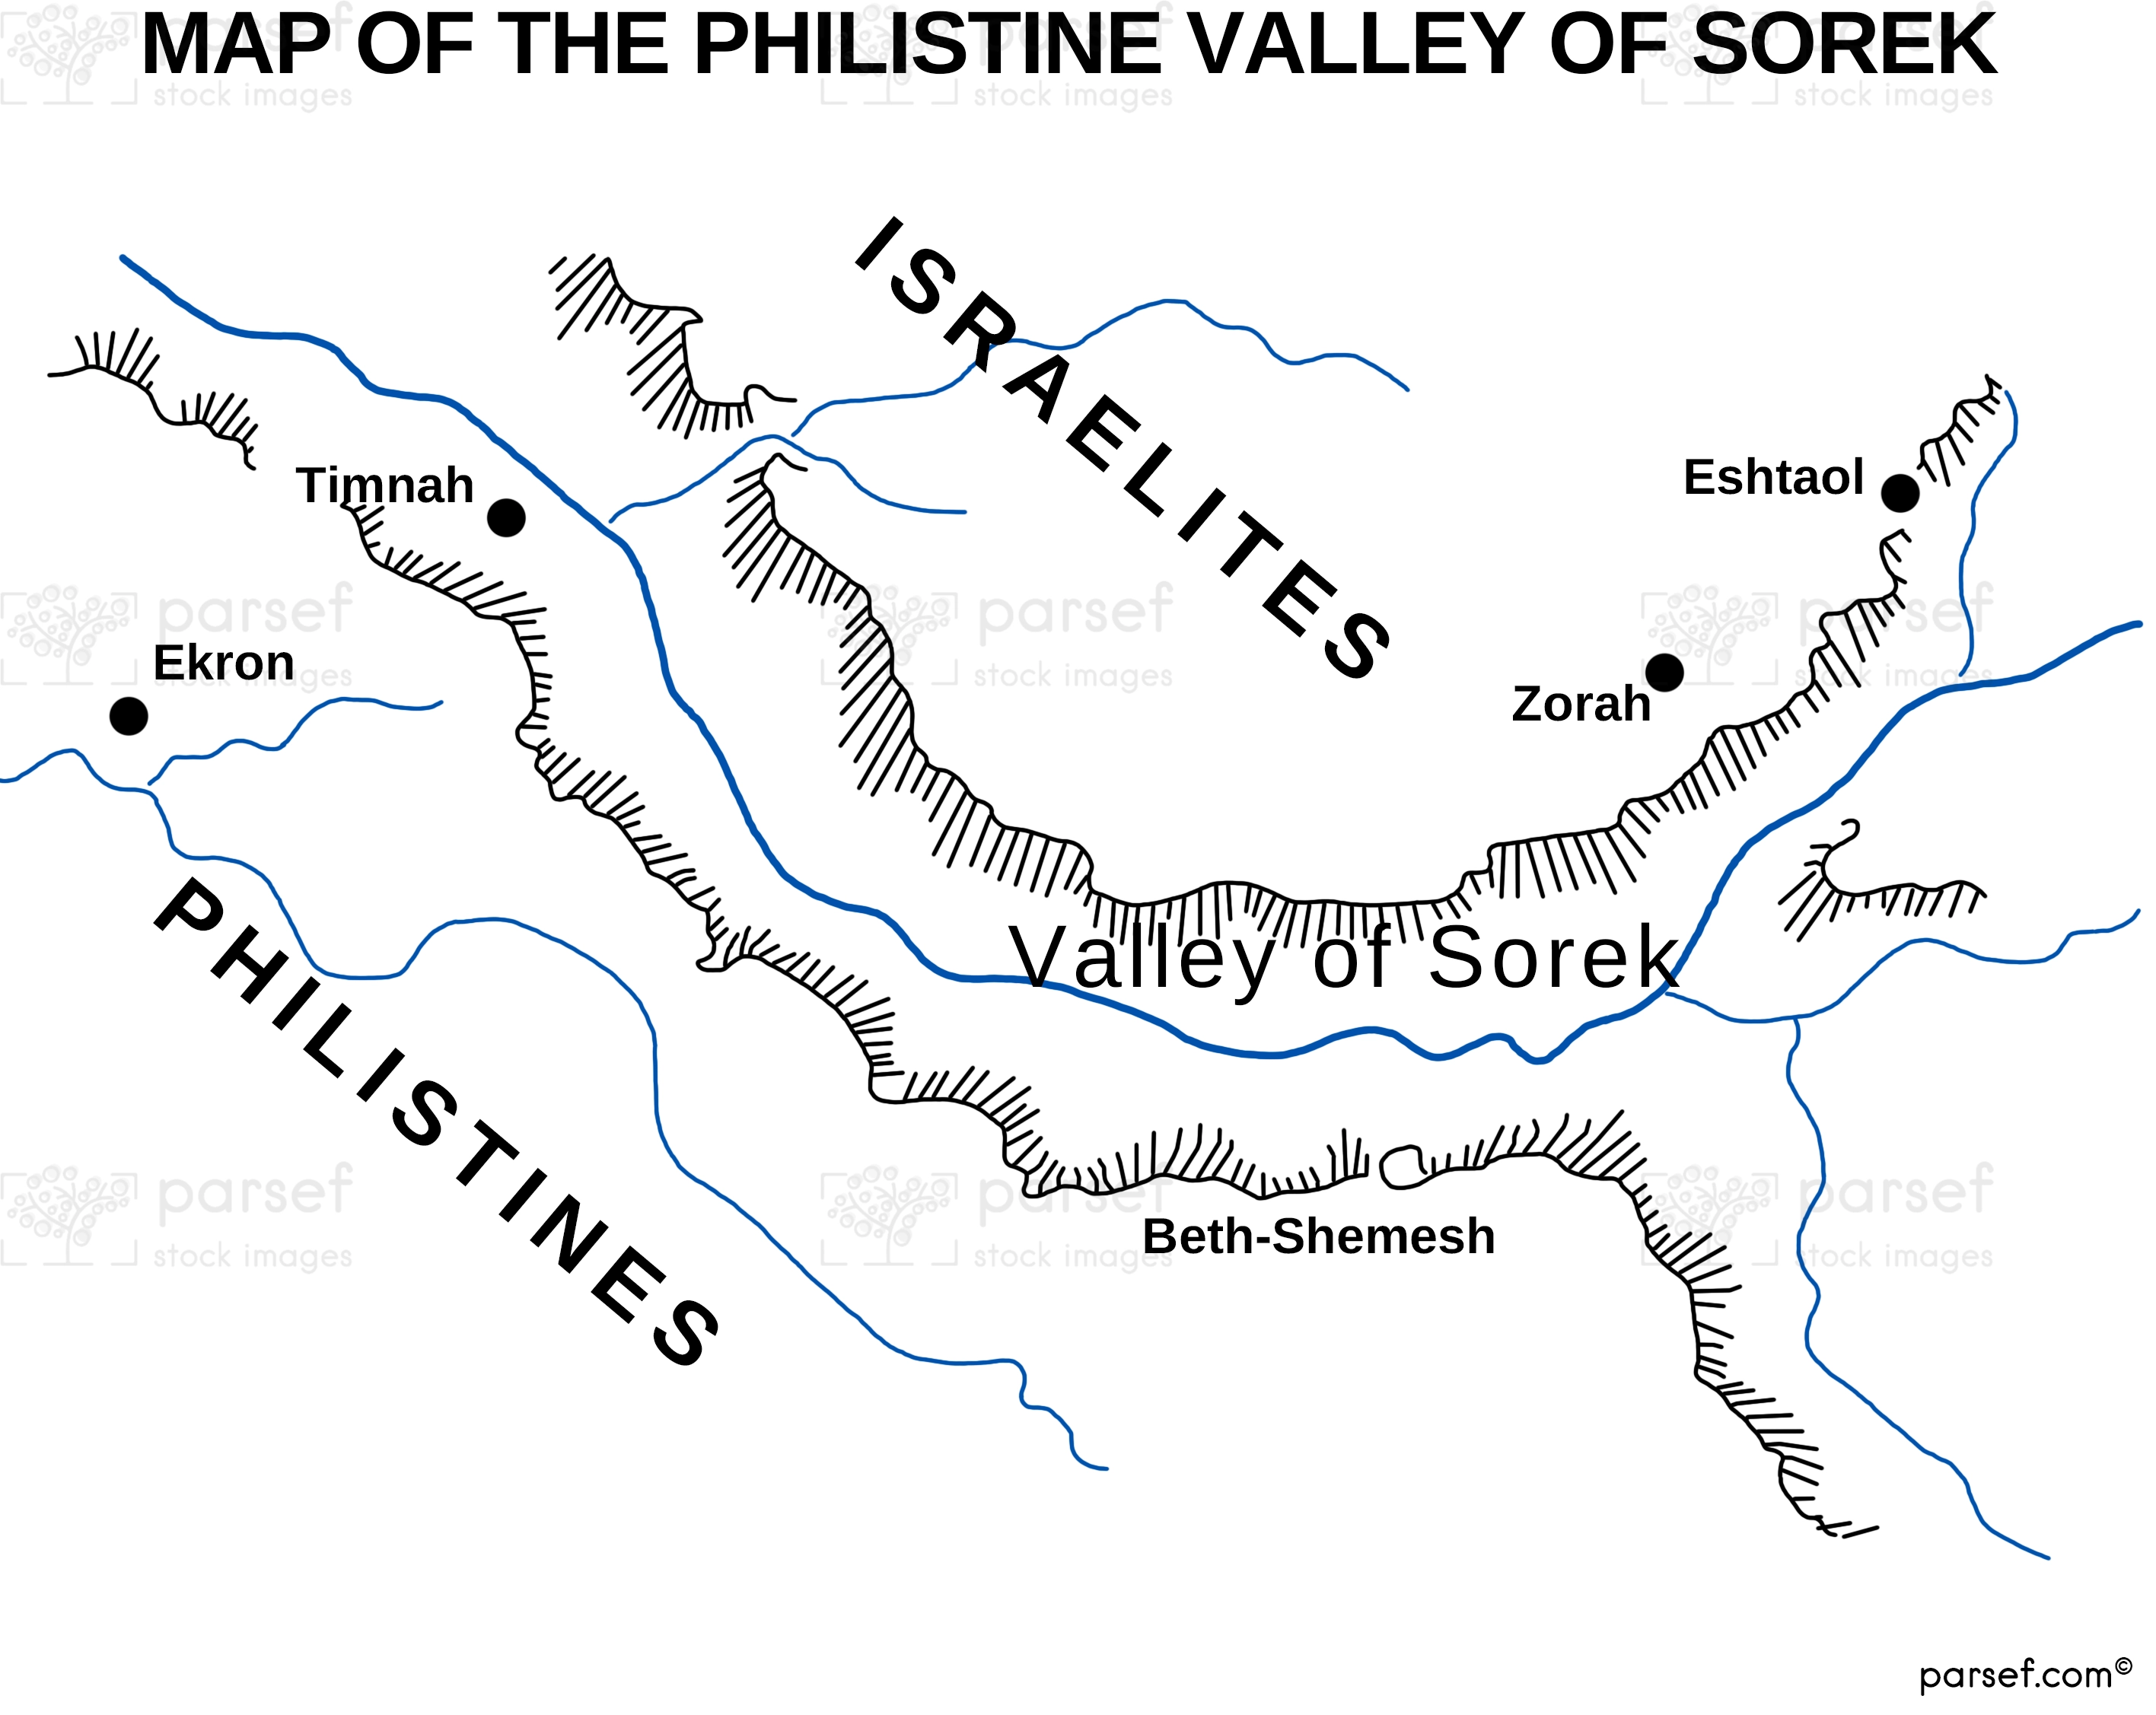 Philistine Valley of Sorek Map image